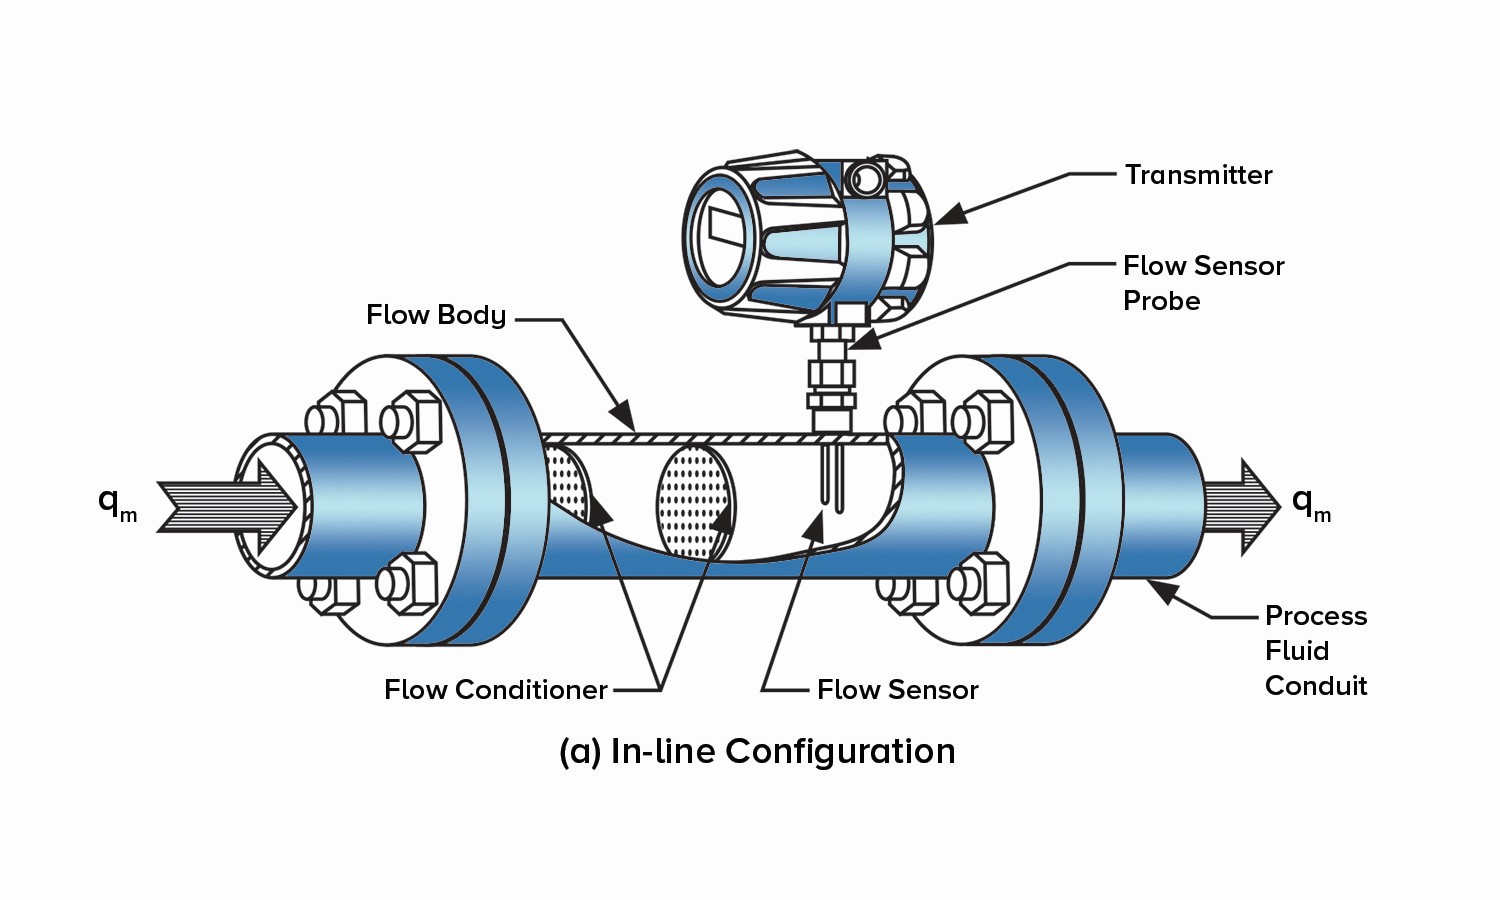 thermal flow meter in-line configuration diagram